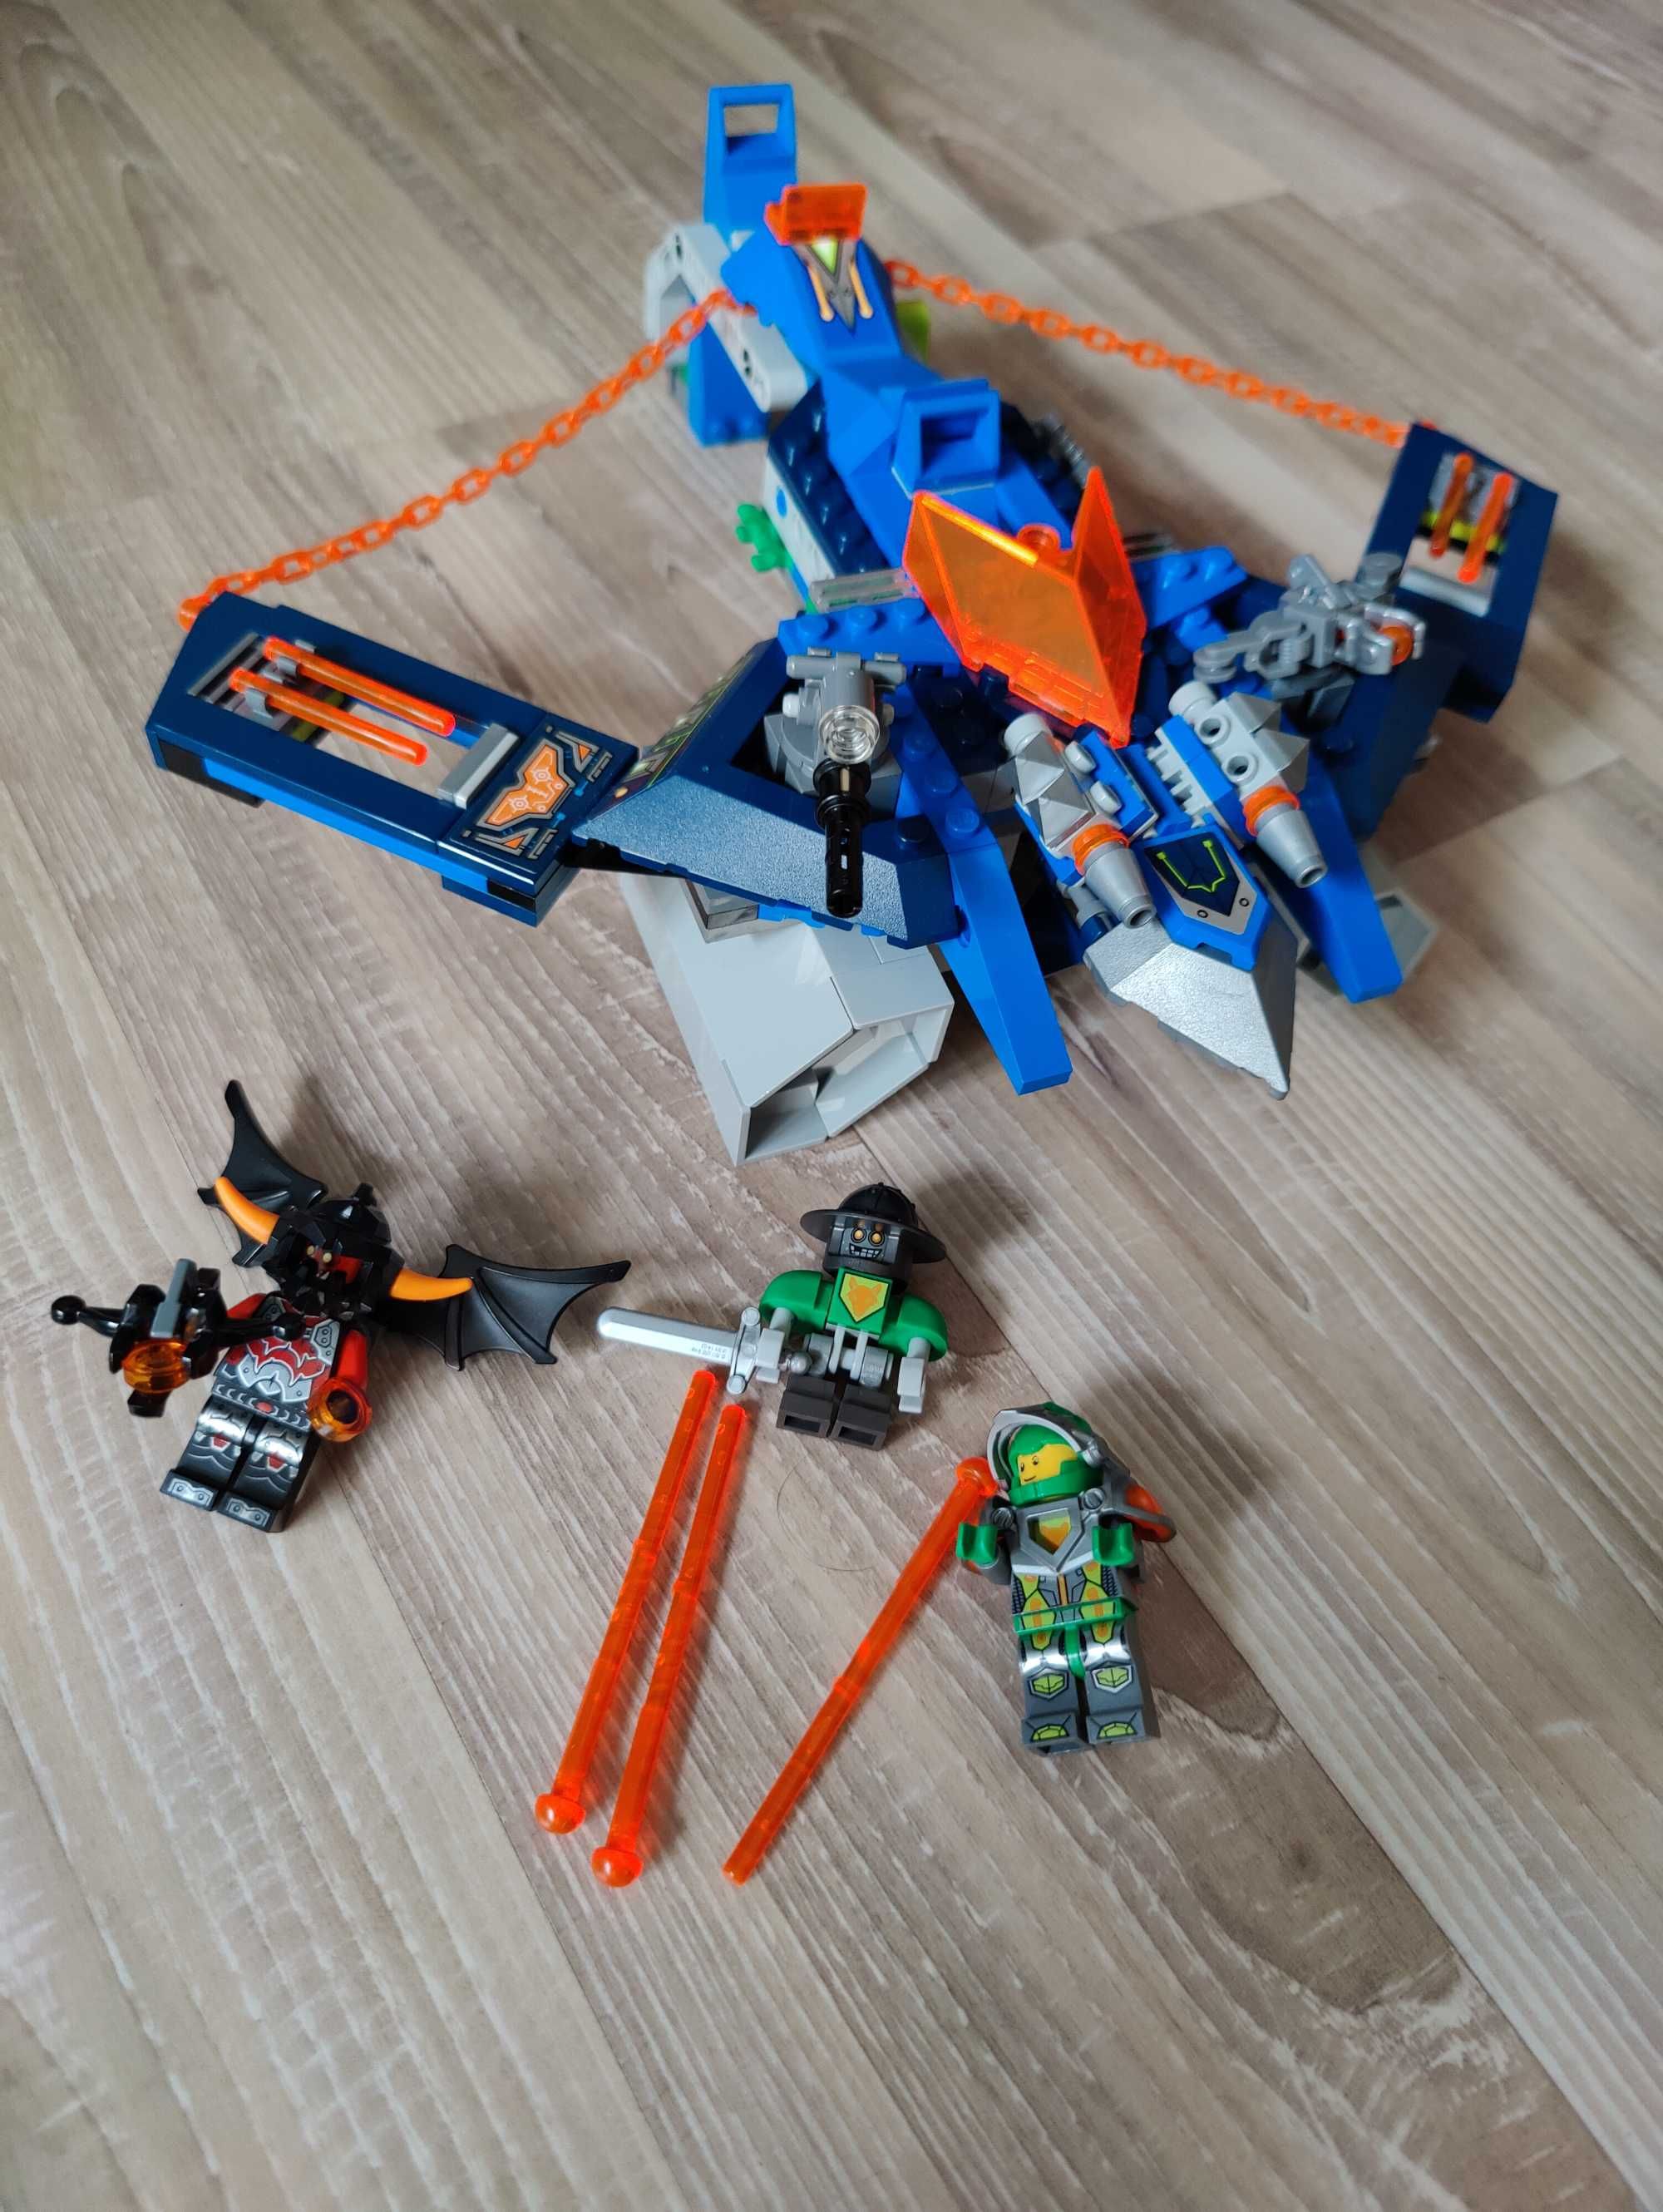 LEGO Nexon Knights - 70313, 70320, 70365, 70366, 70363, 70362, 70319